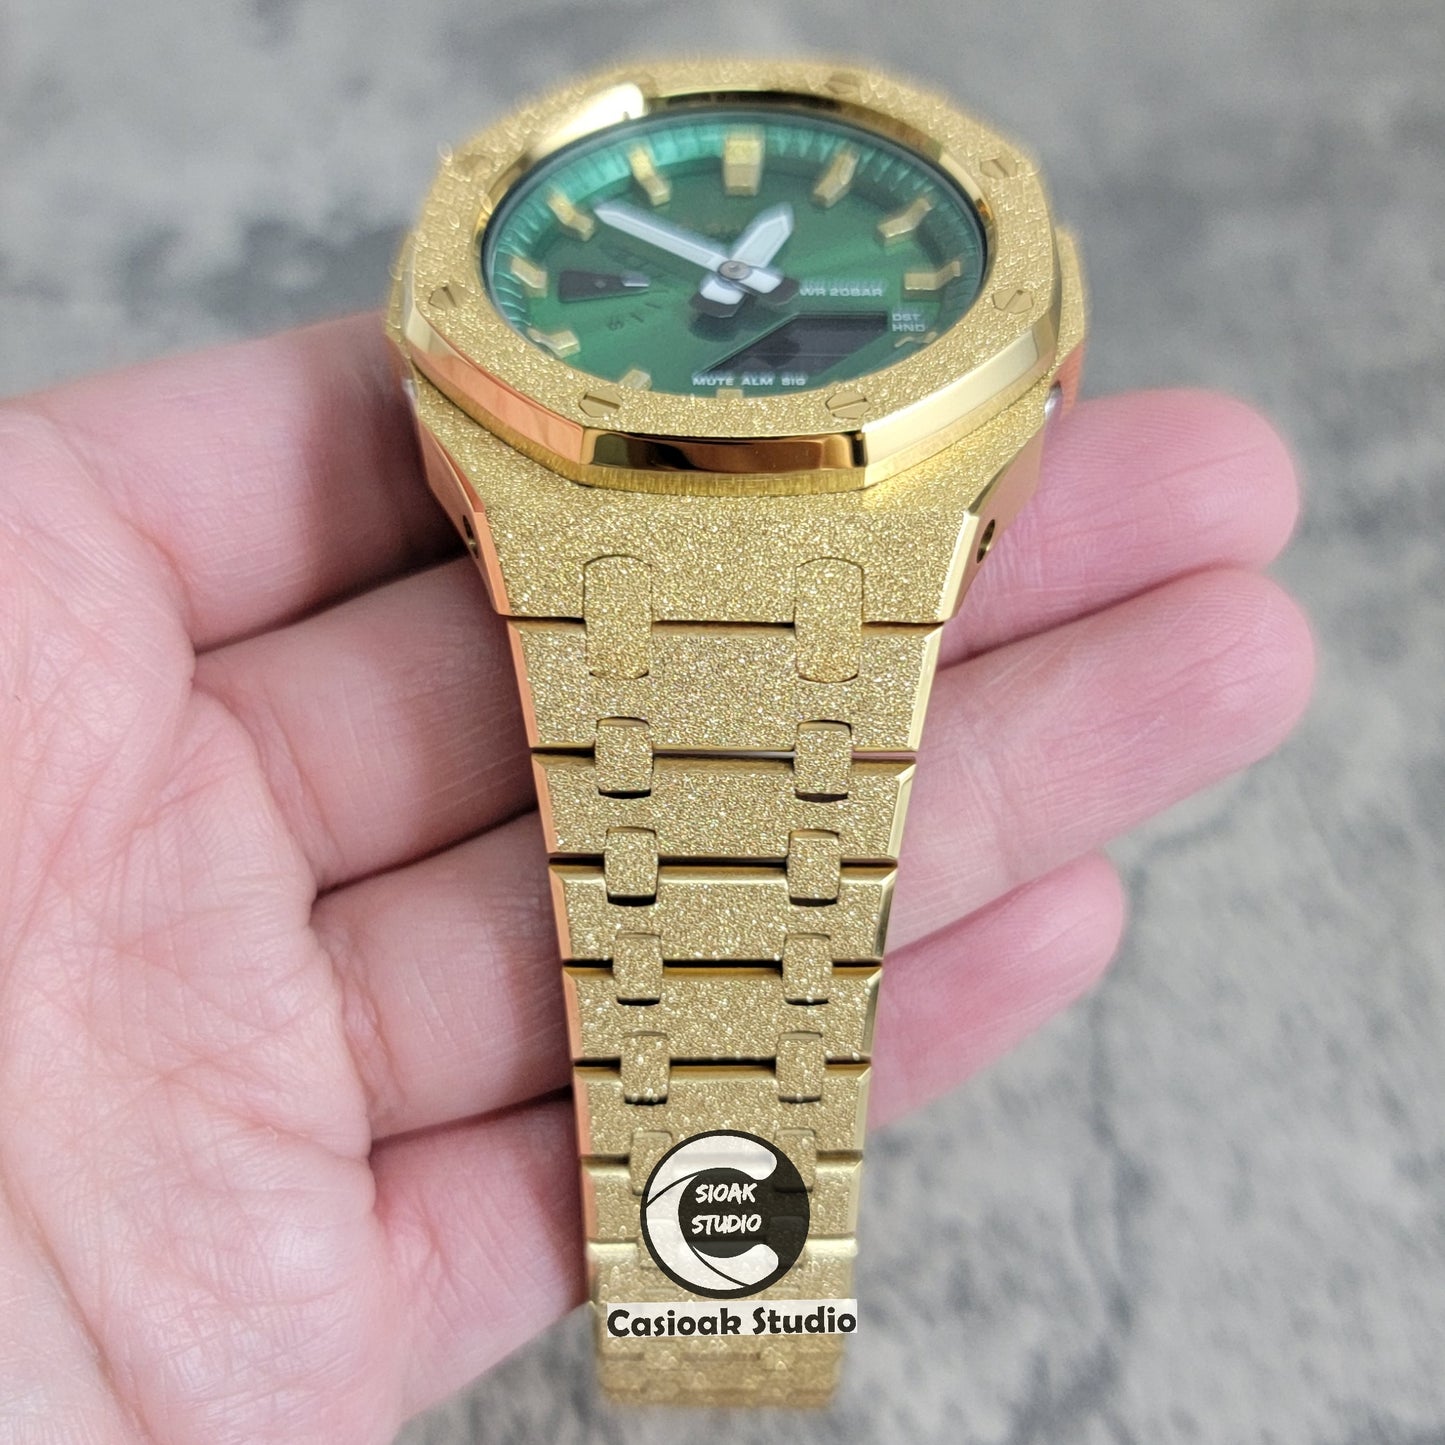 Casioak Mod Watch Frosted Glod Case Metal Strap Green Gold Time Mark Green Dial 44mm - Casioak Studio